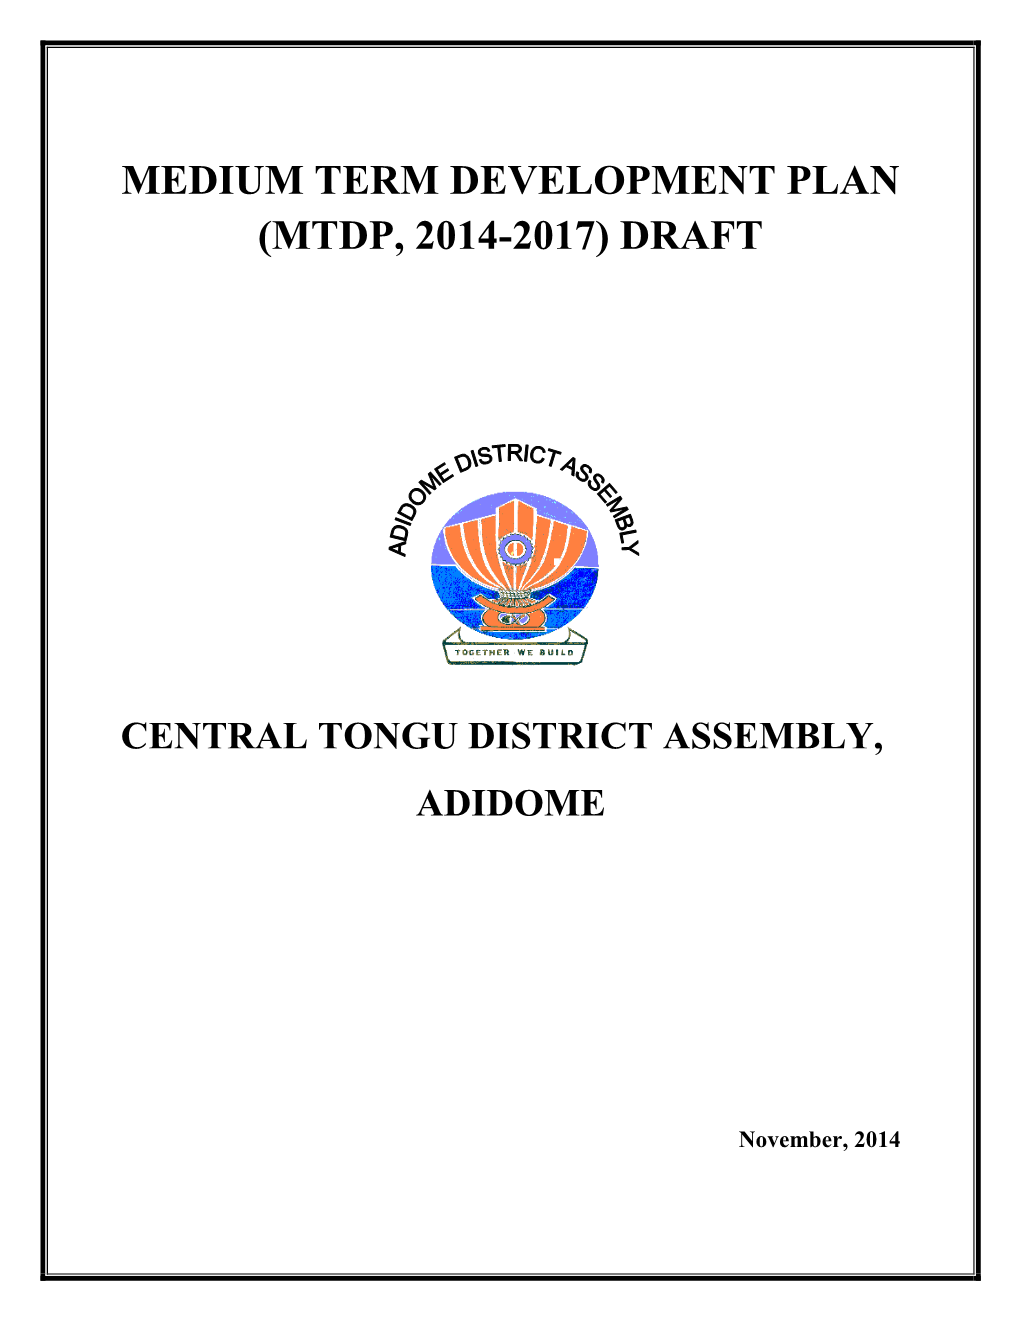 Medium Term Development Plan (Mtdp, 2014-2017) Draft